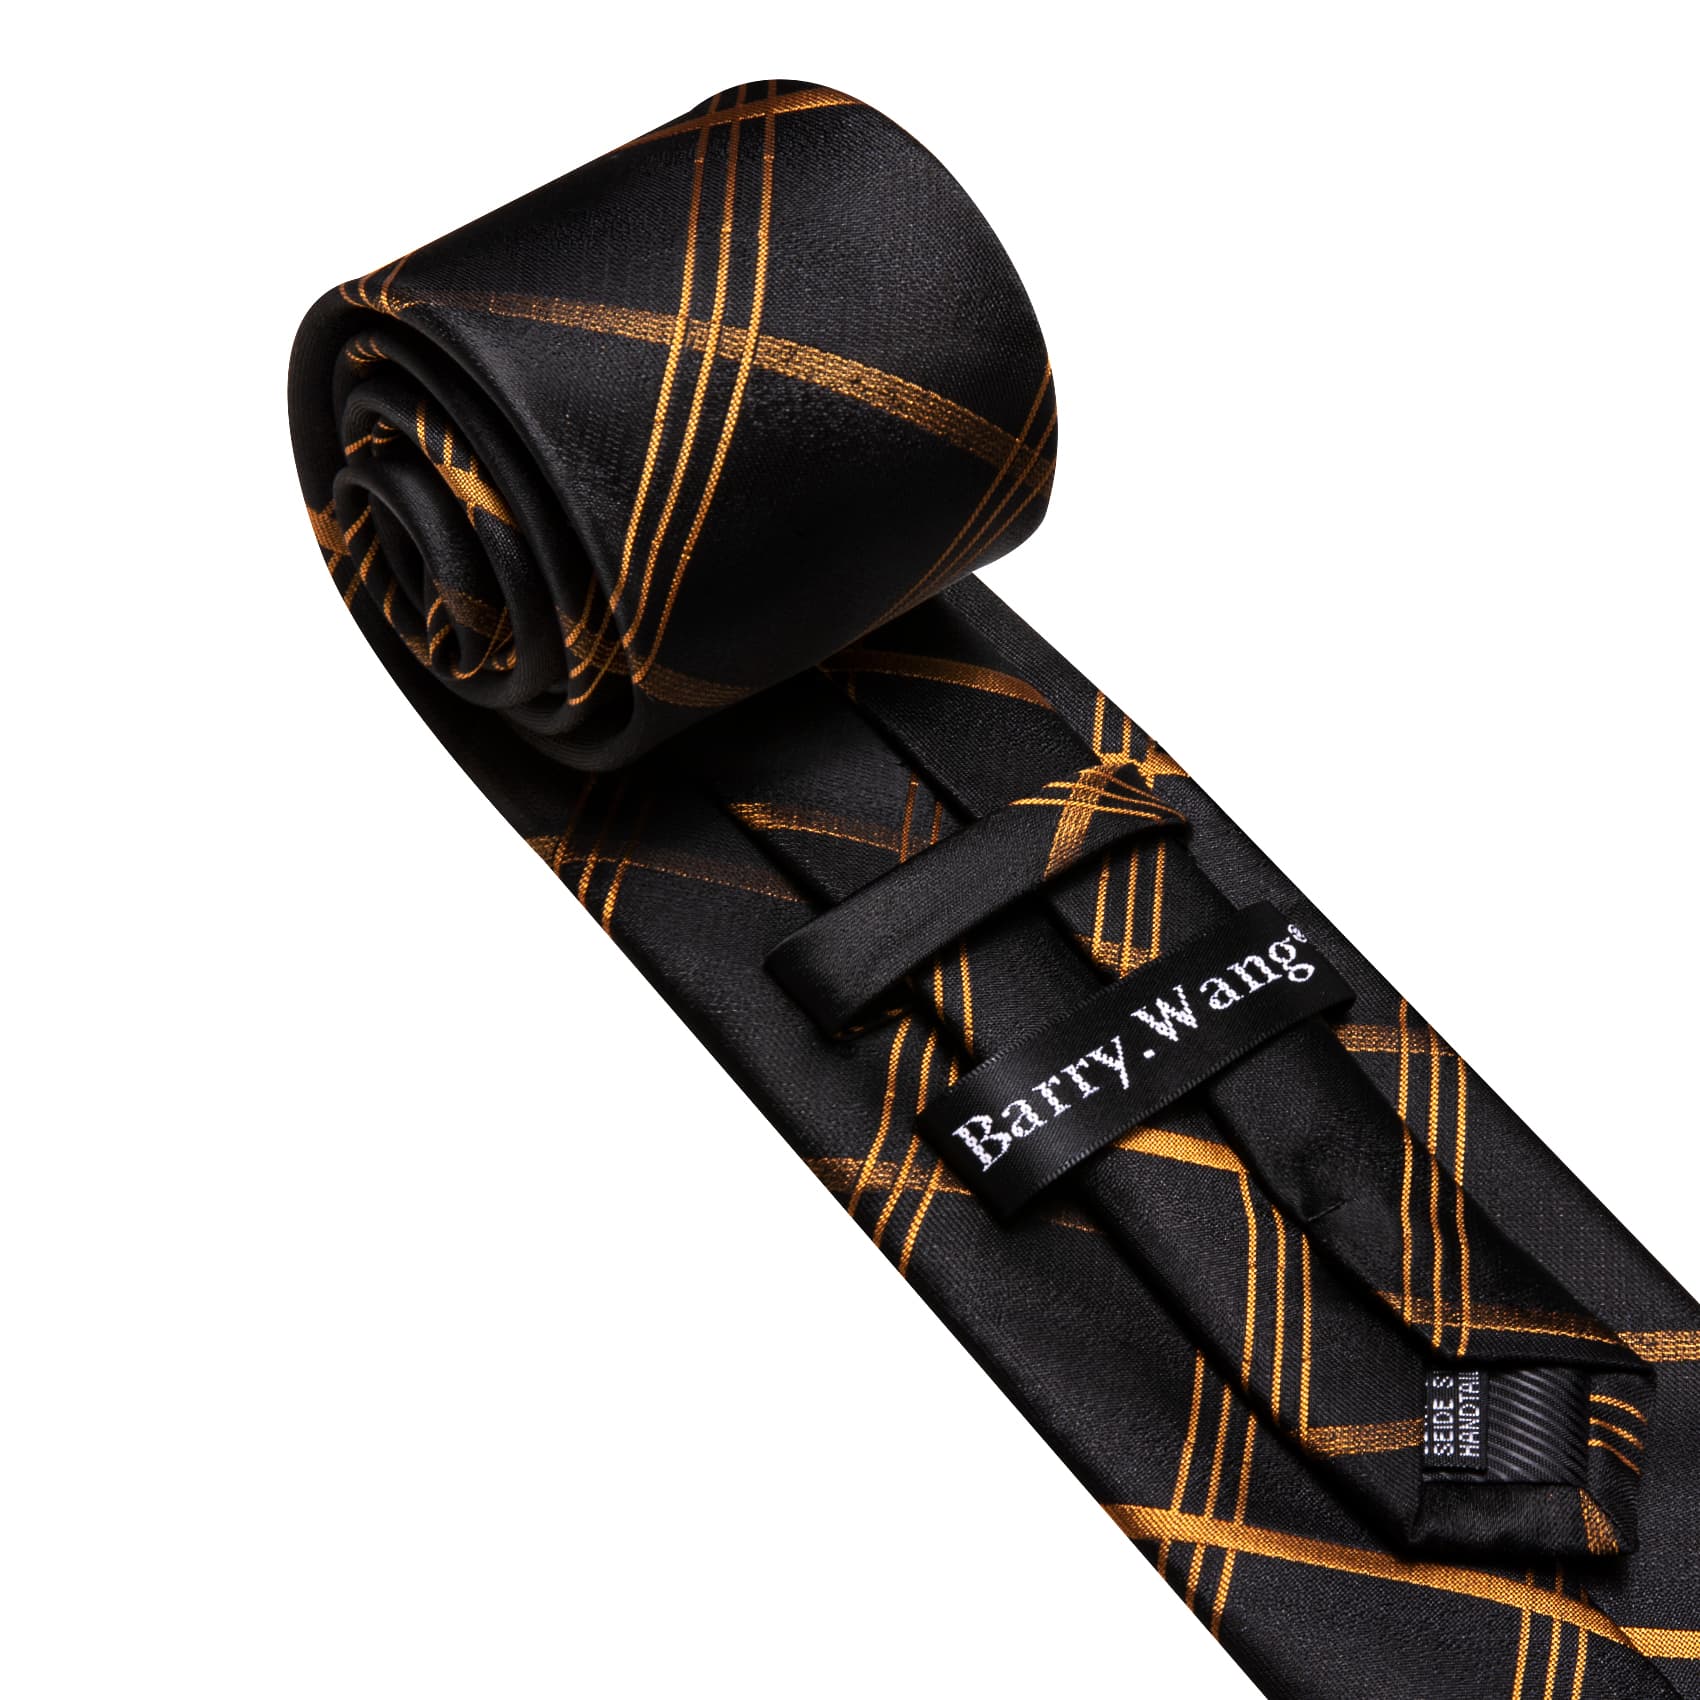  Black Tie Peru Brown Pinstripes Jacquard Striped Necktie Set